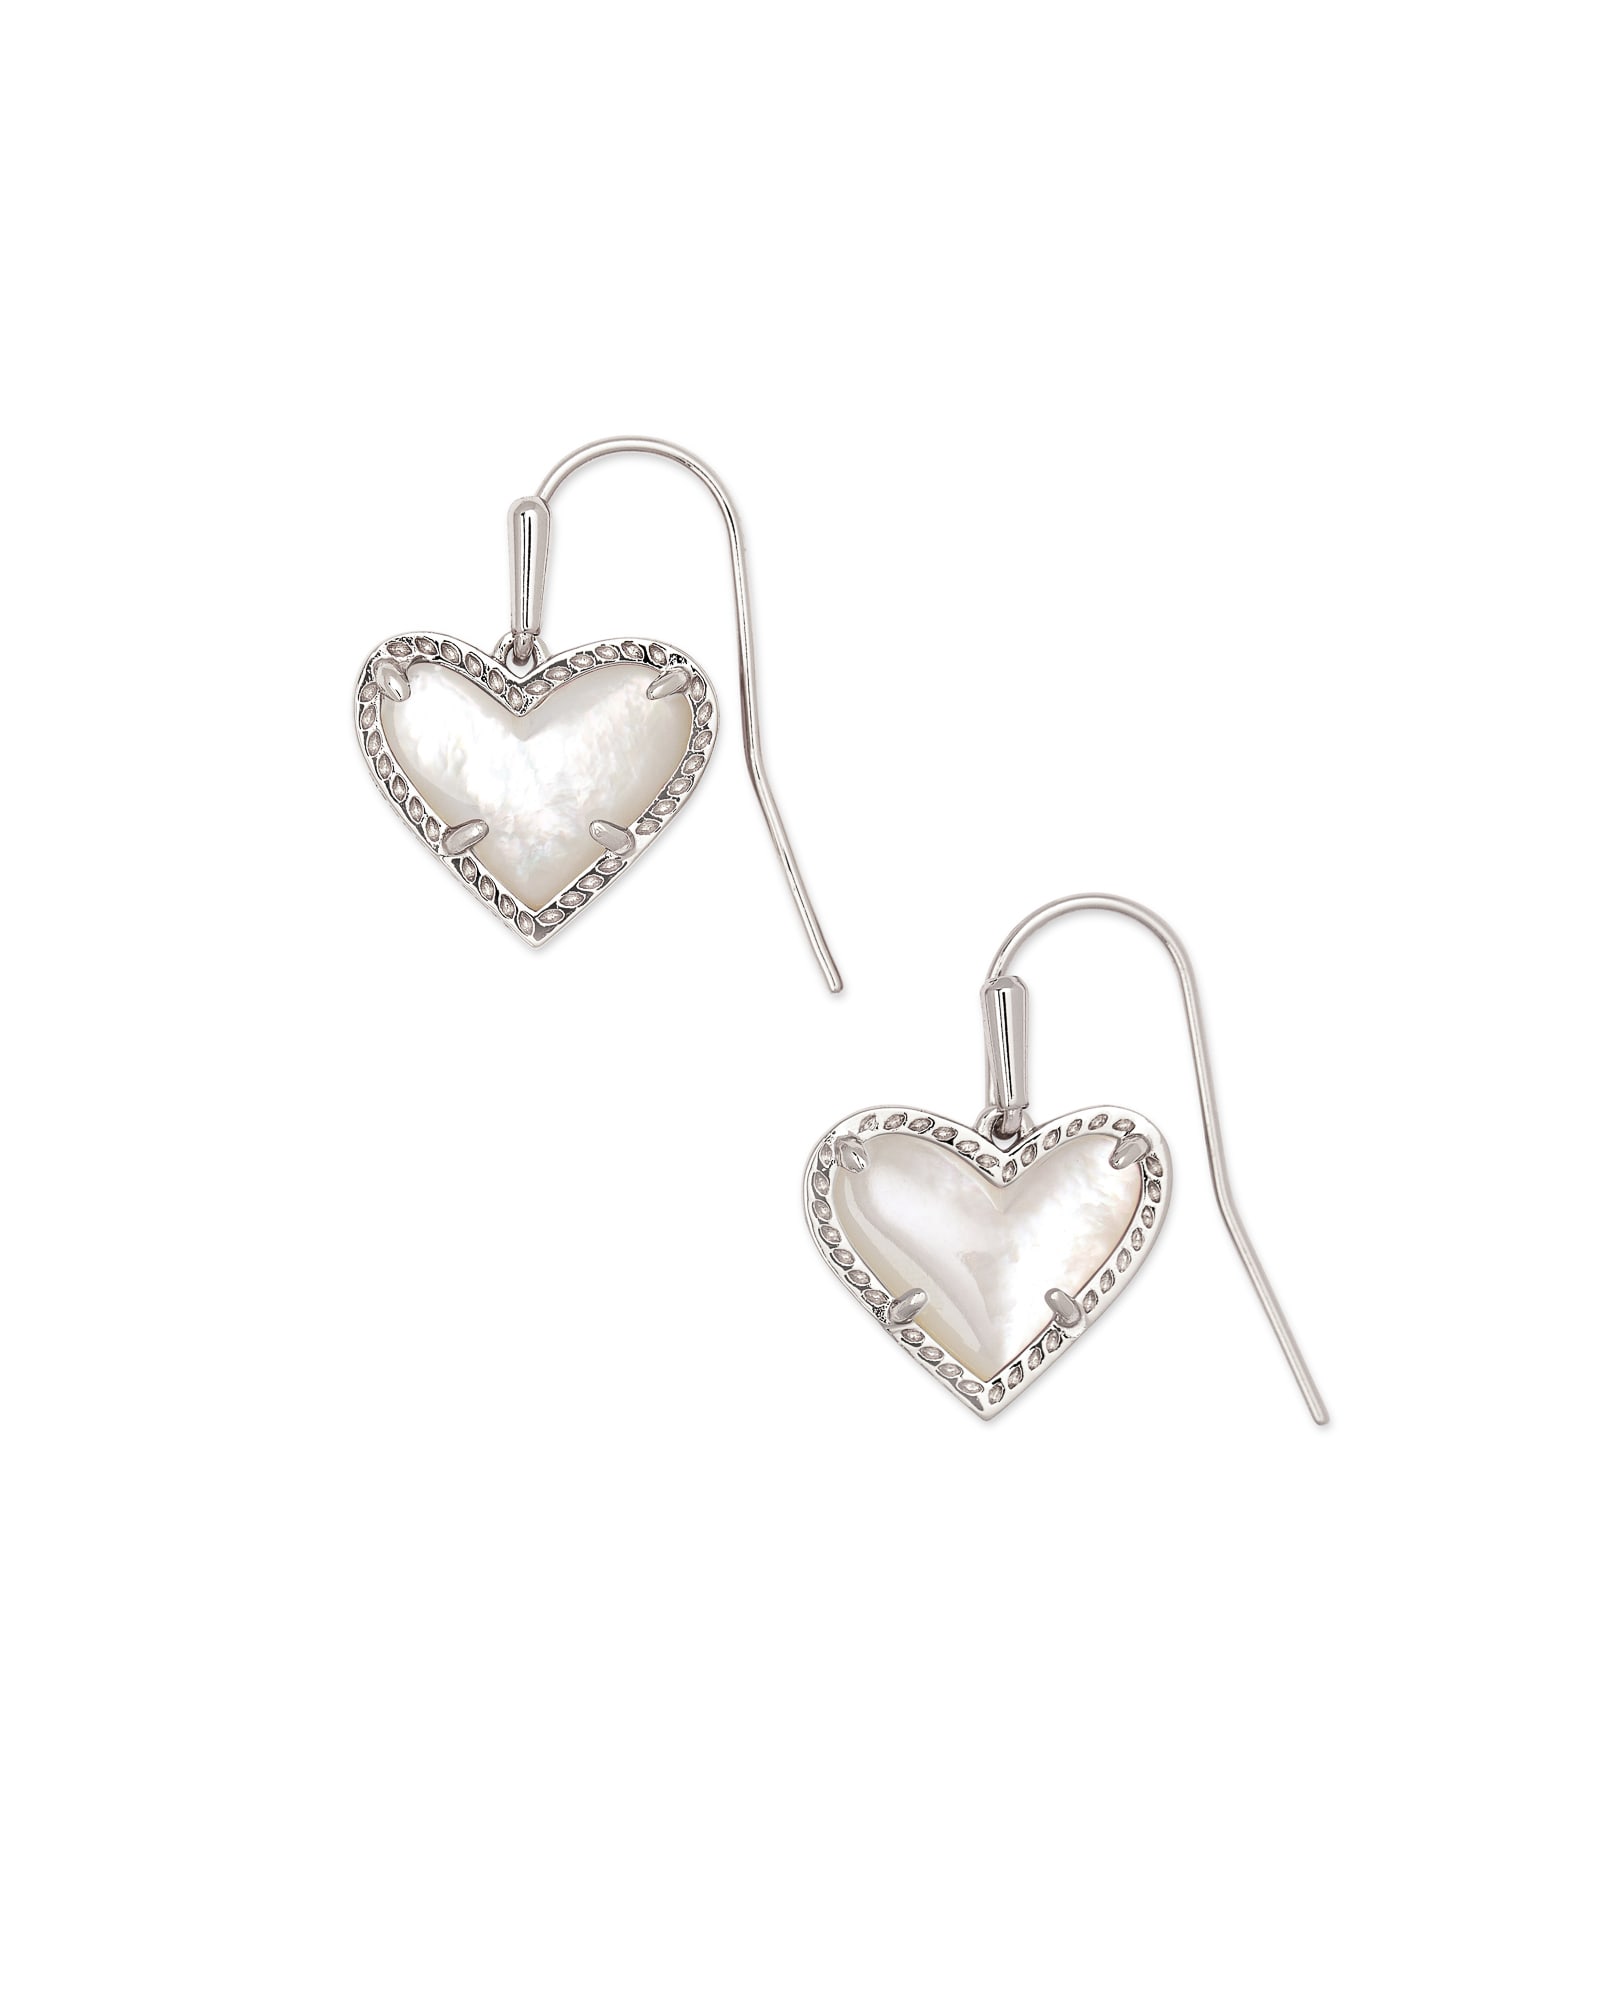 Ari Heart Silver Drop Earrings in Ivory Mother-of-Pearl